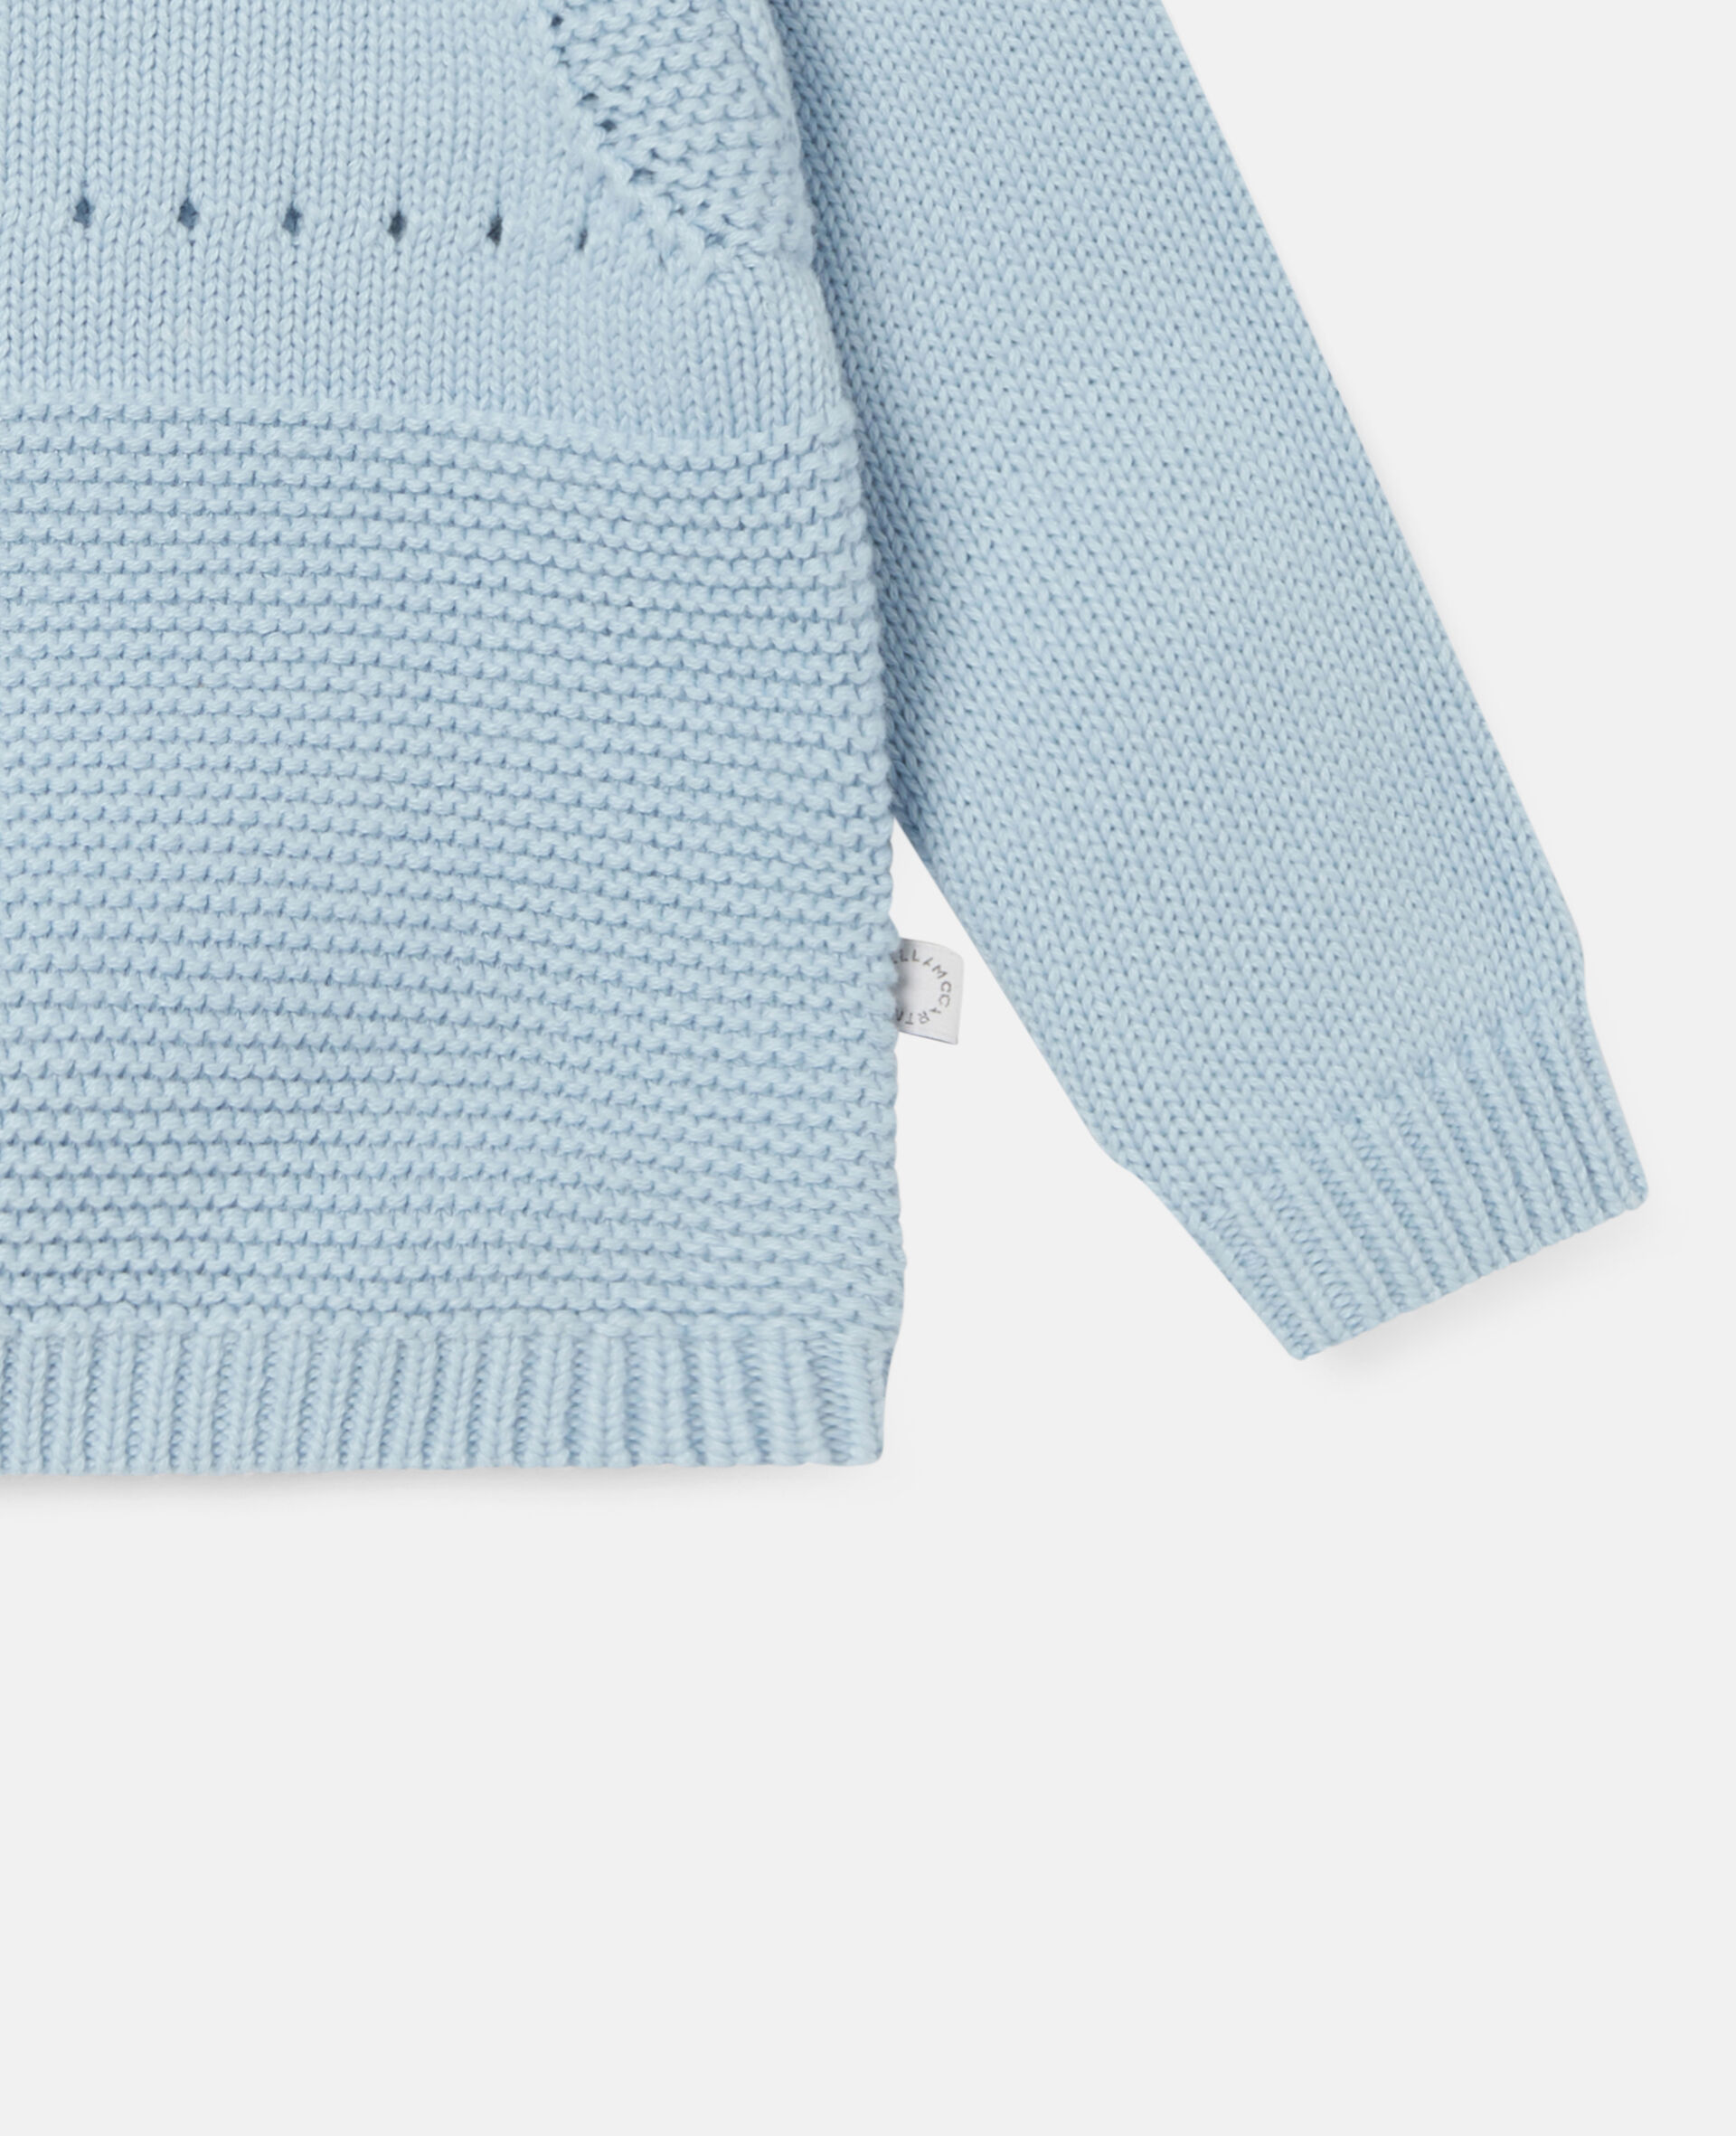 Happy Dog Knit Intarsia Sweater-Blue-large image number 2